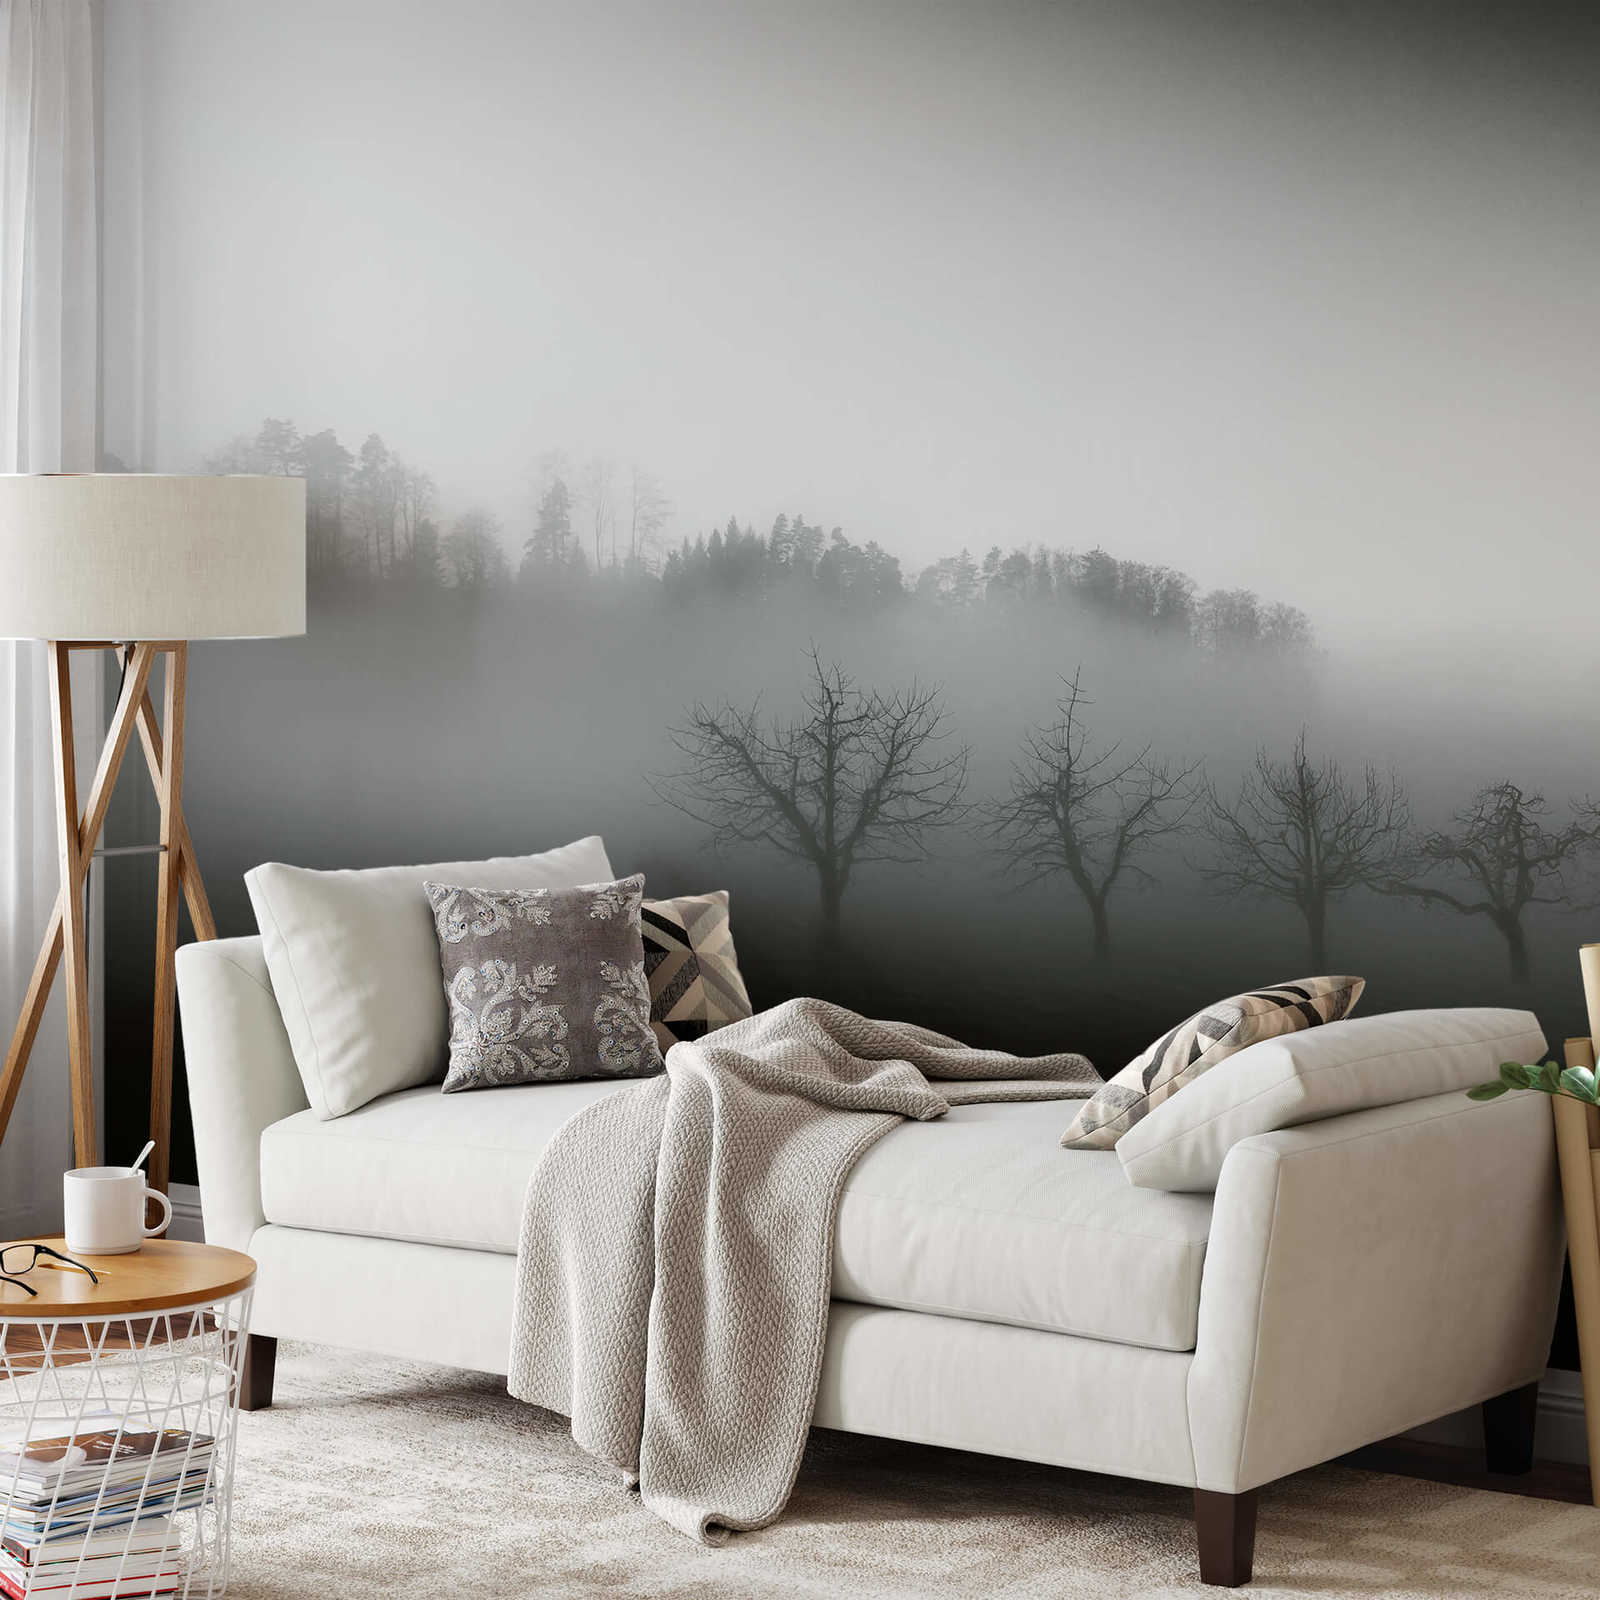             Photo wallpaper landscape with fog - black, white, grey
        